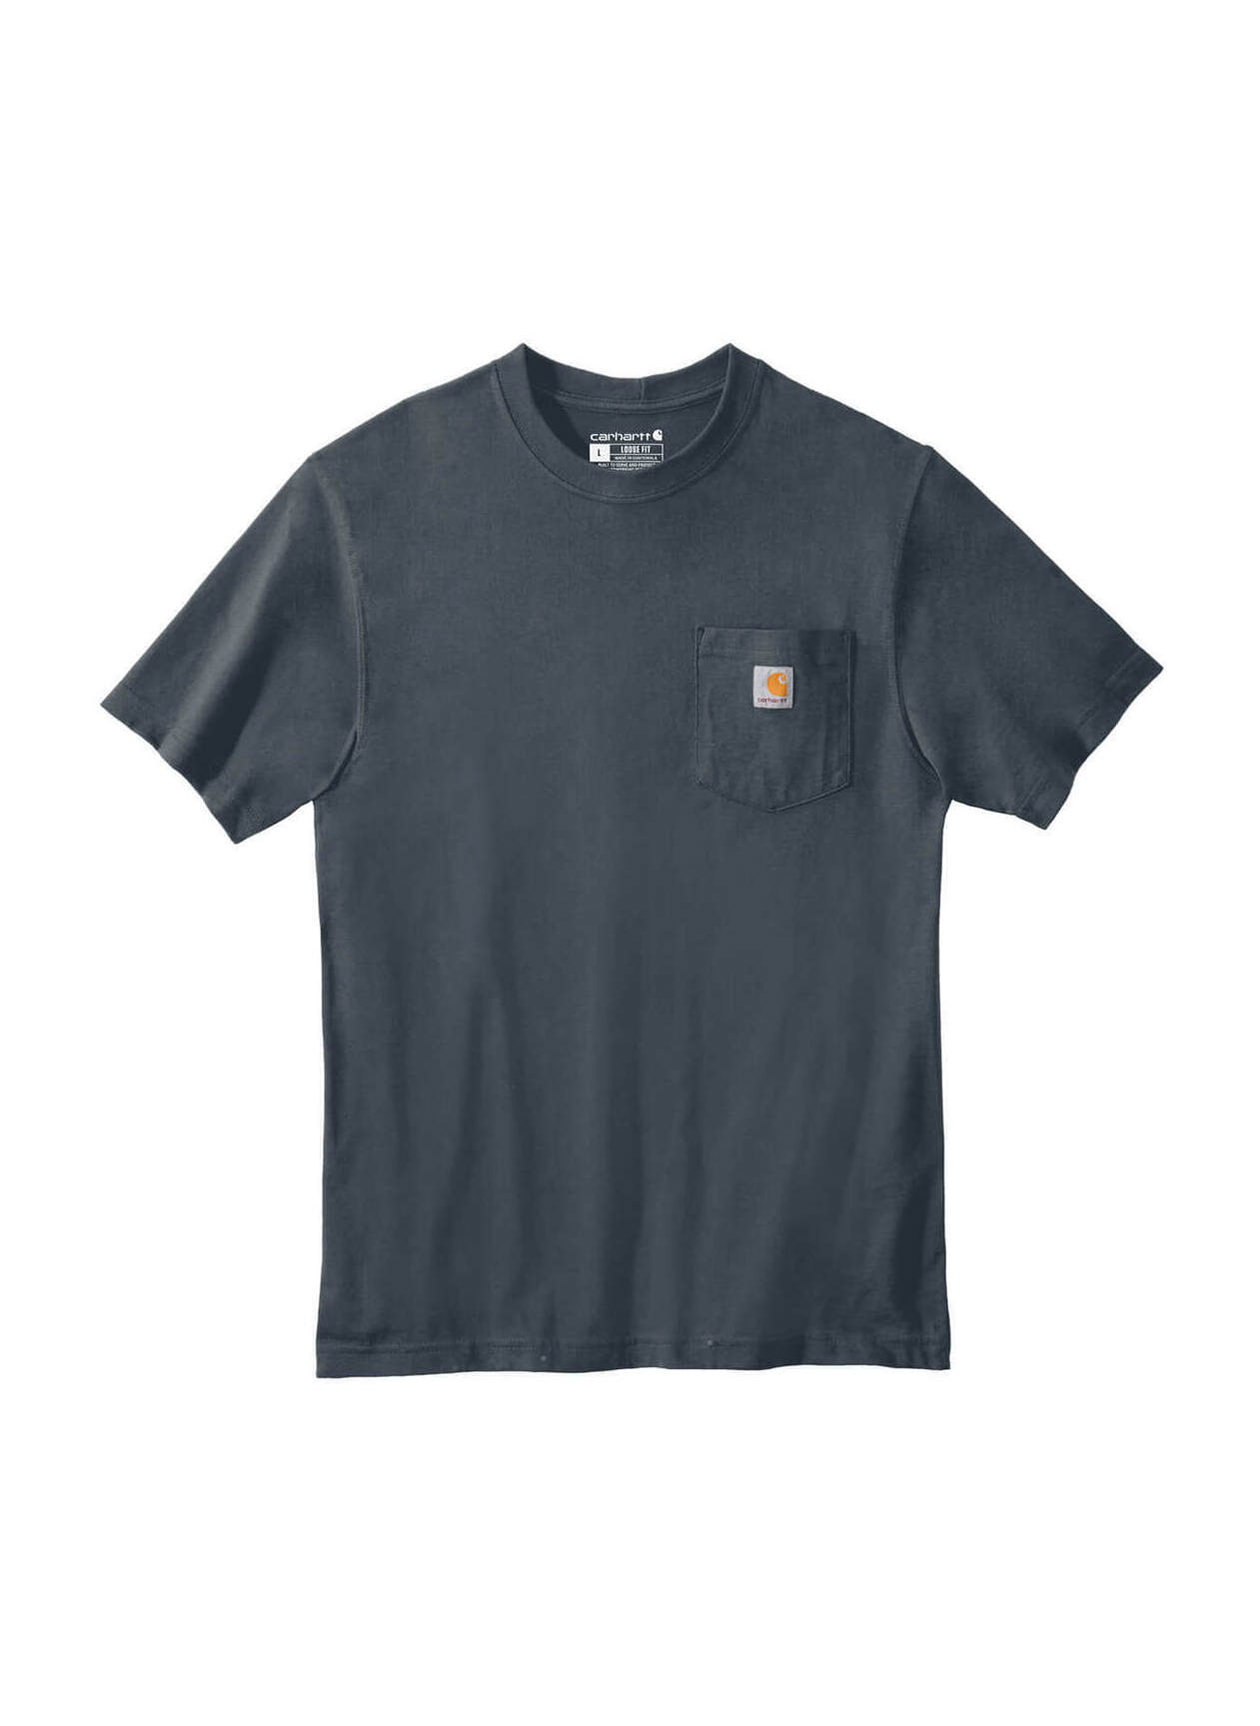 Carhartt Men's Bluestone Workwear Pocket T-Shirt